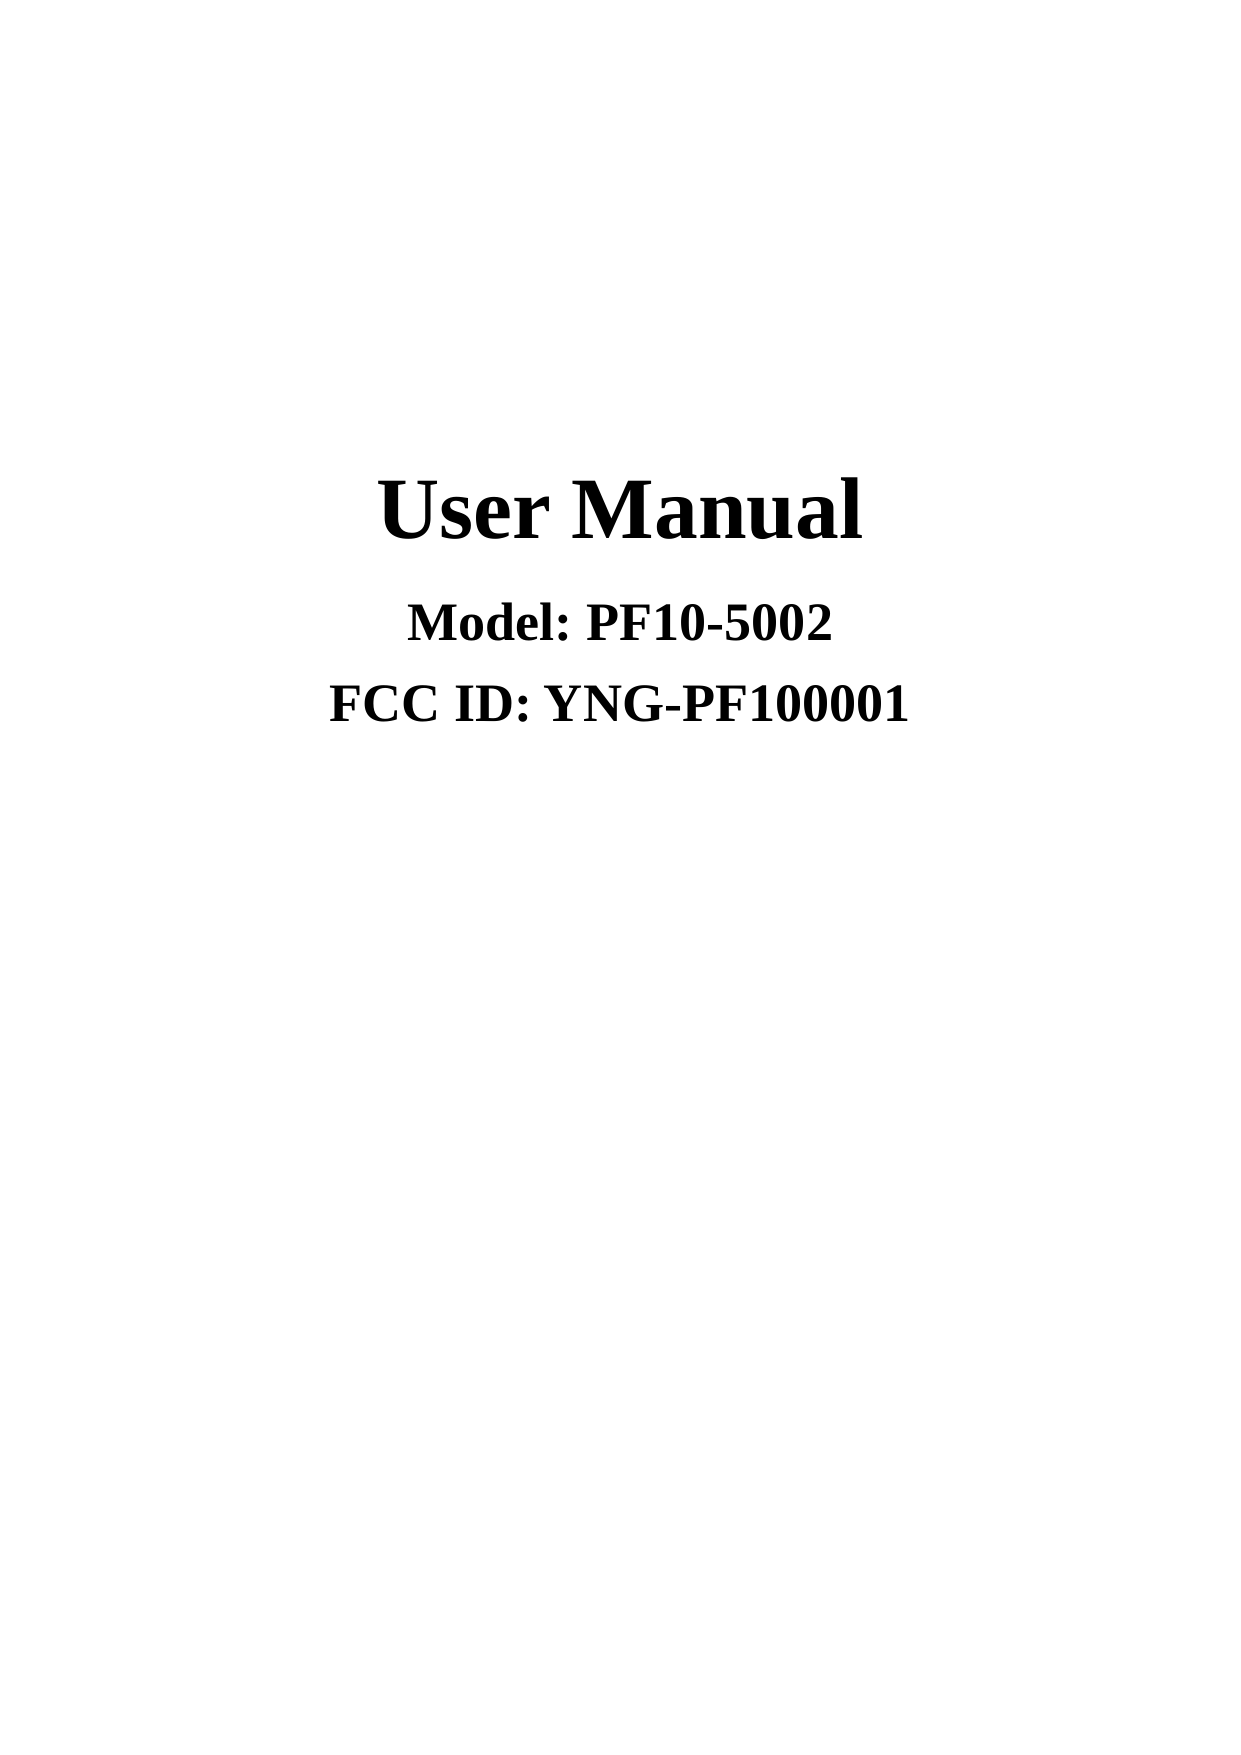      User Manual Model: PF10-5002 FCC ID: YNG-PF100001   